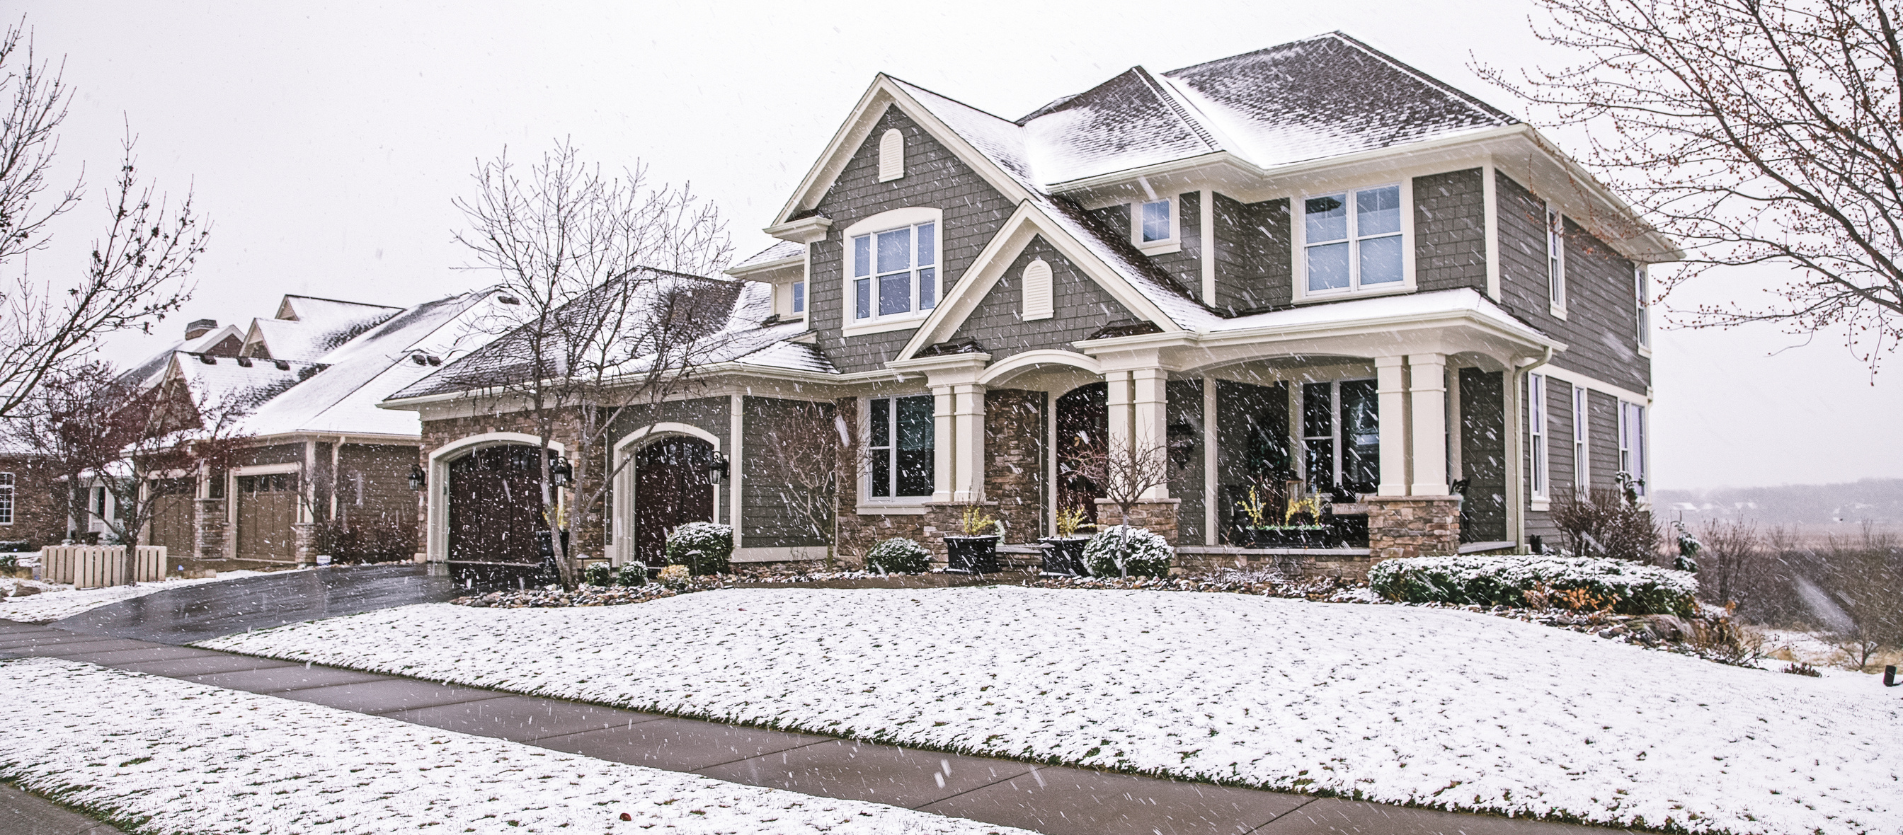 Snow falls on a neighborhood home.